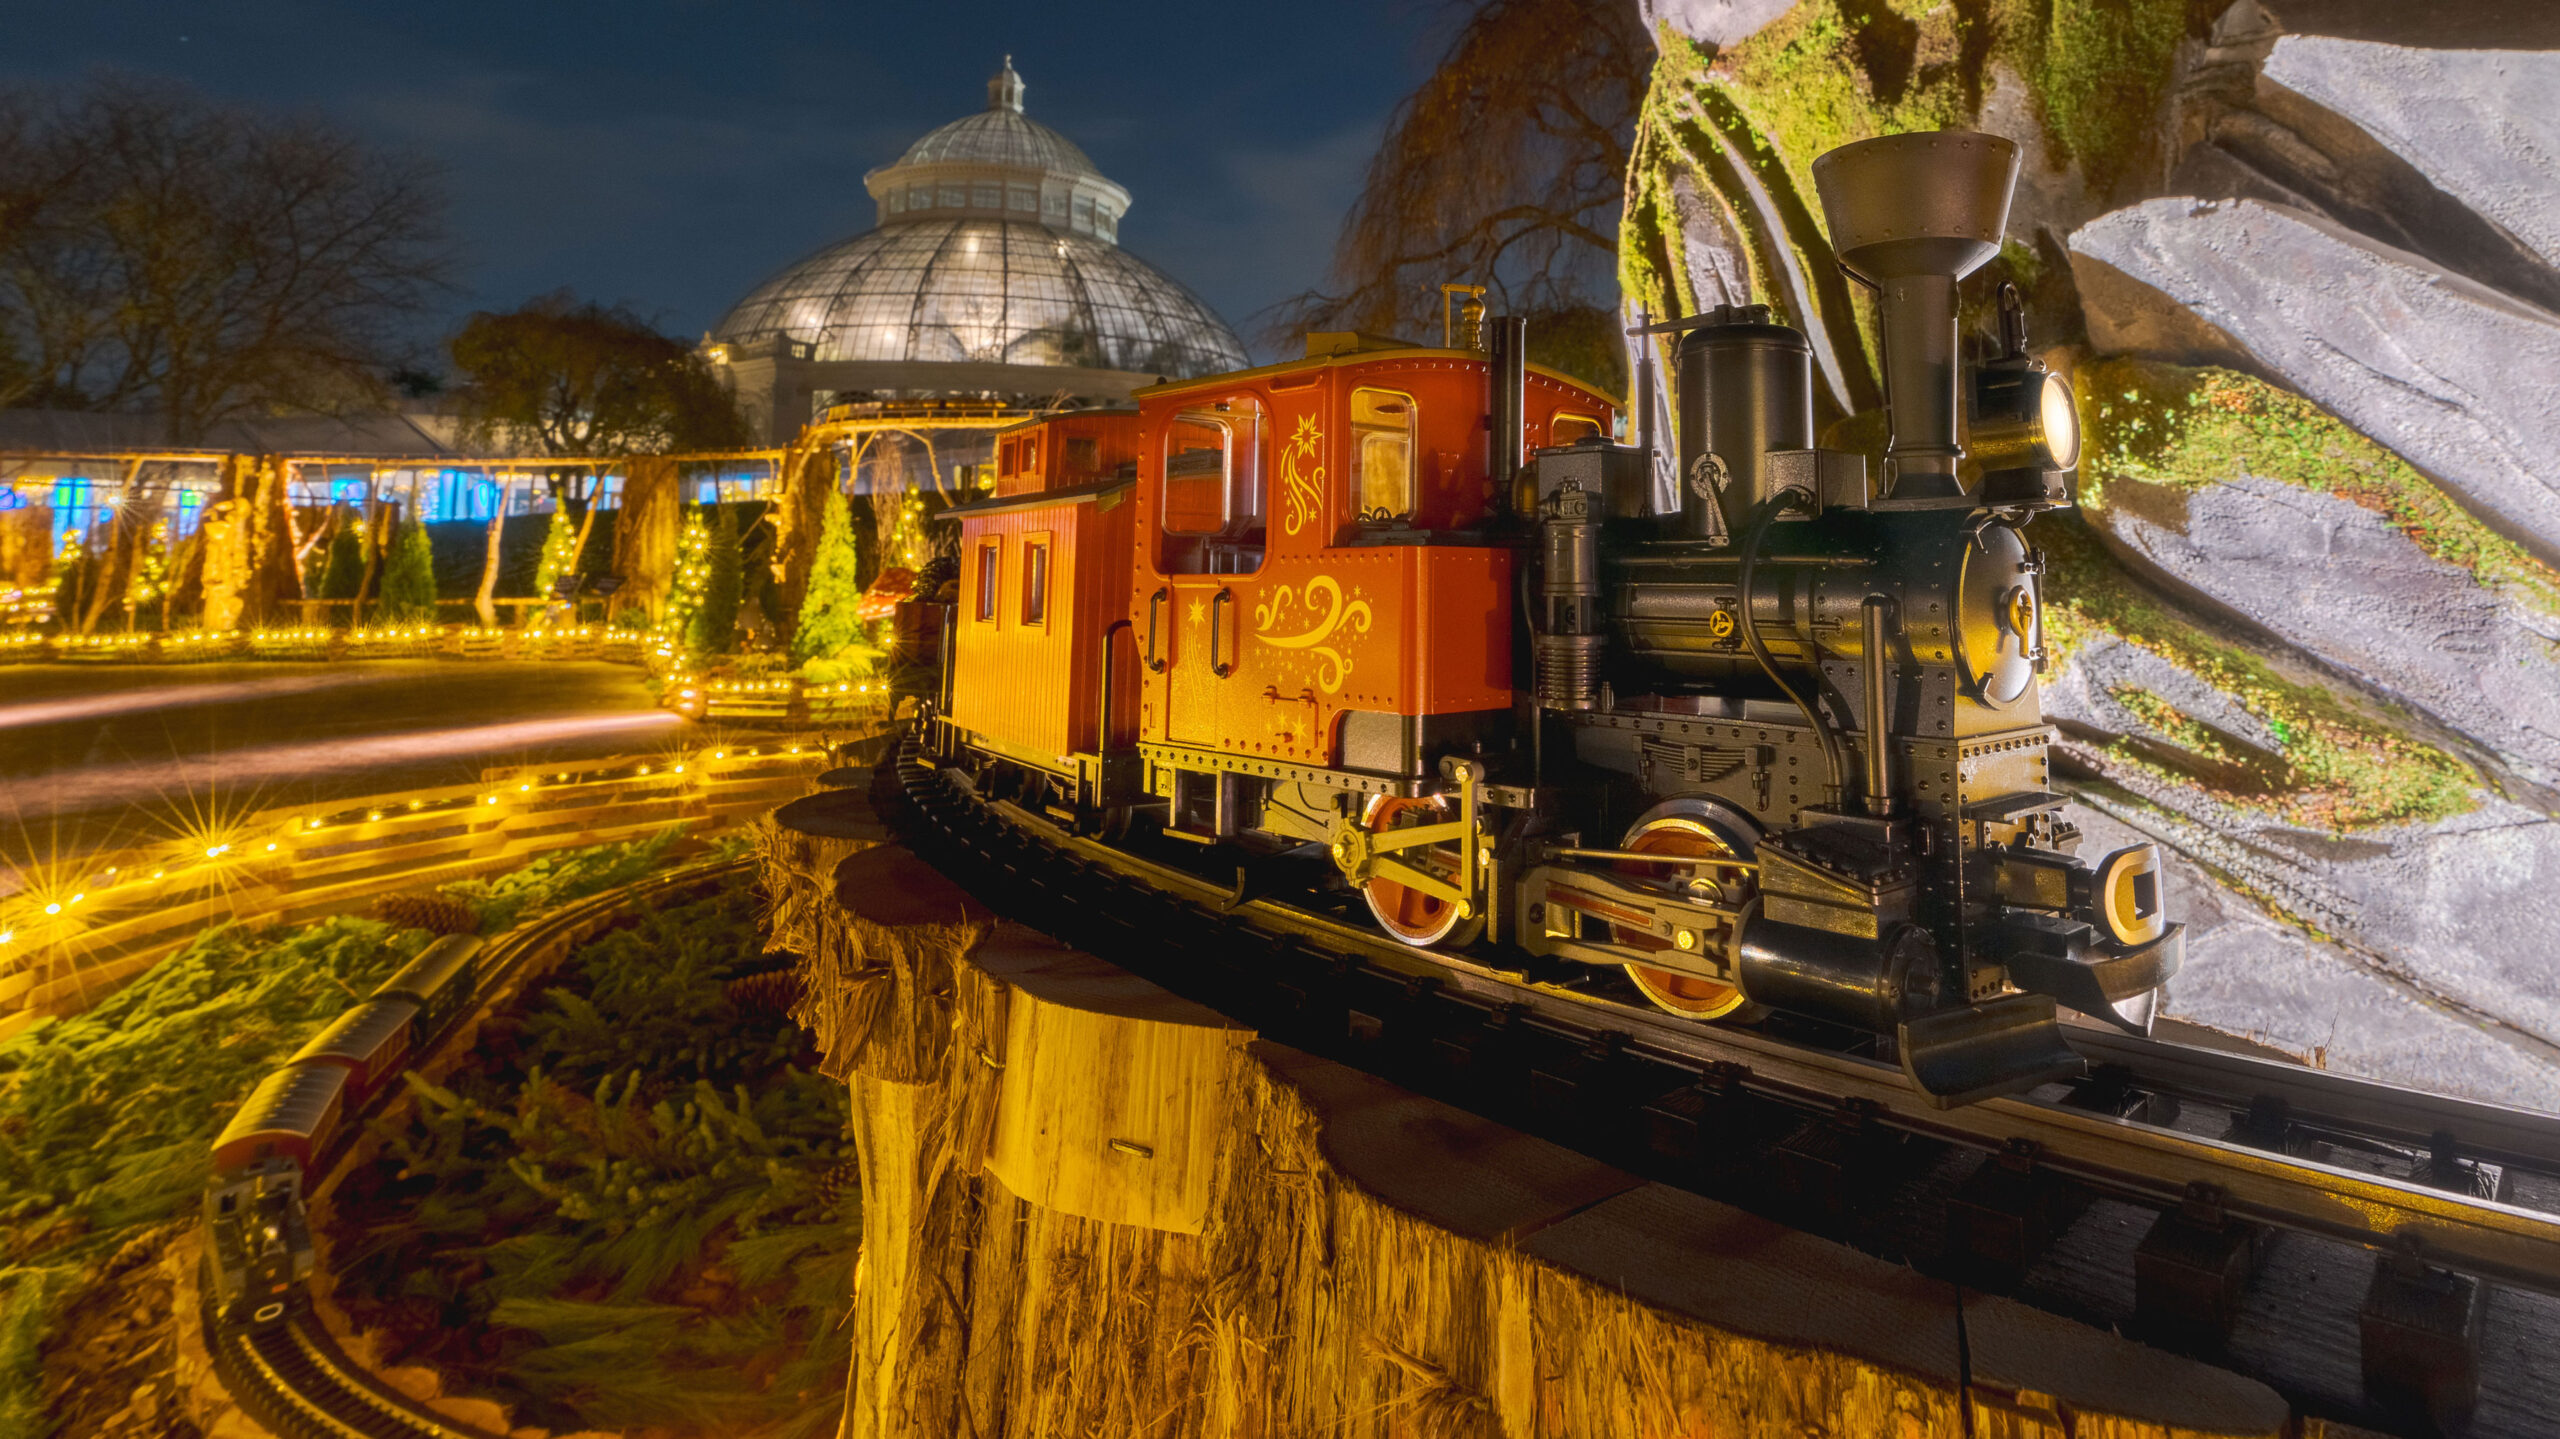 A model train travels through a warmly lit garden holiday display